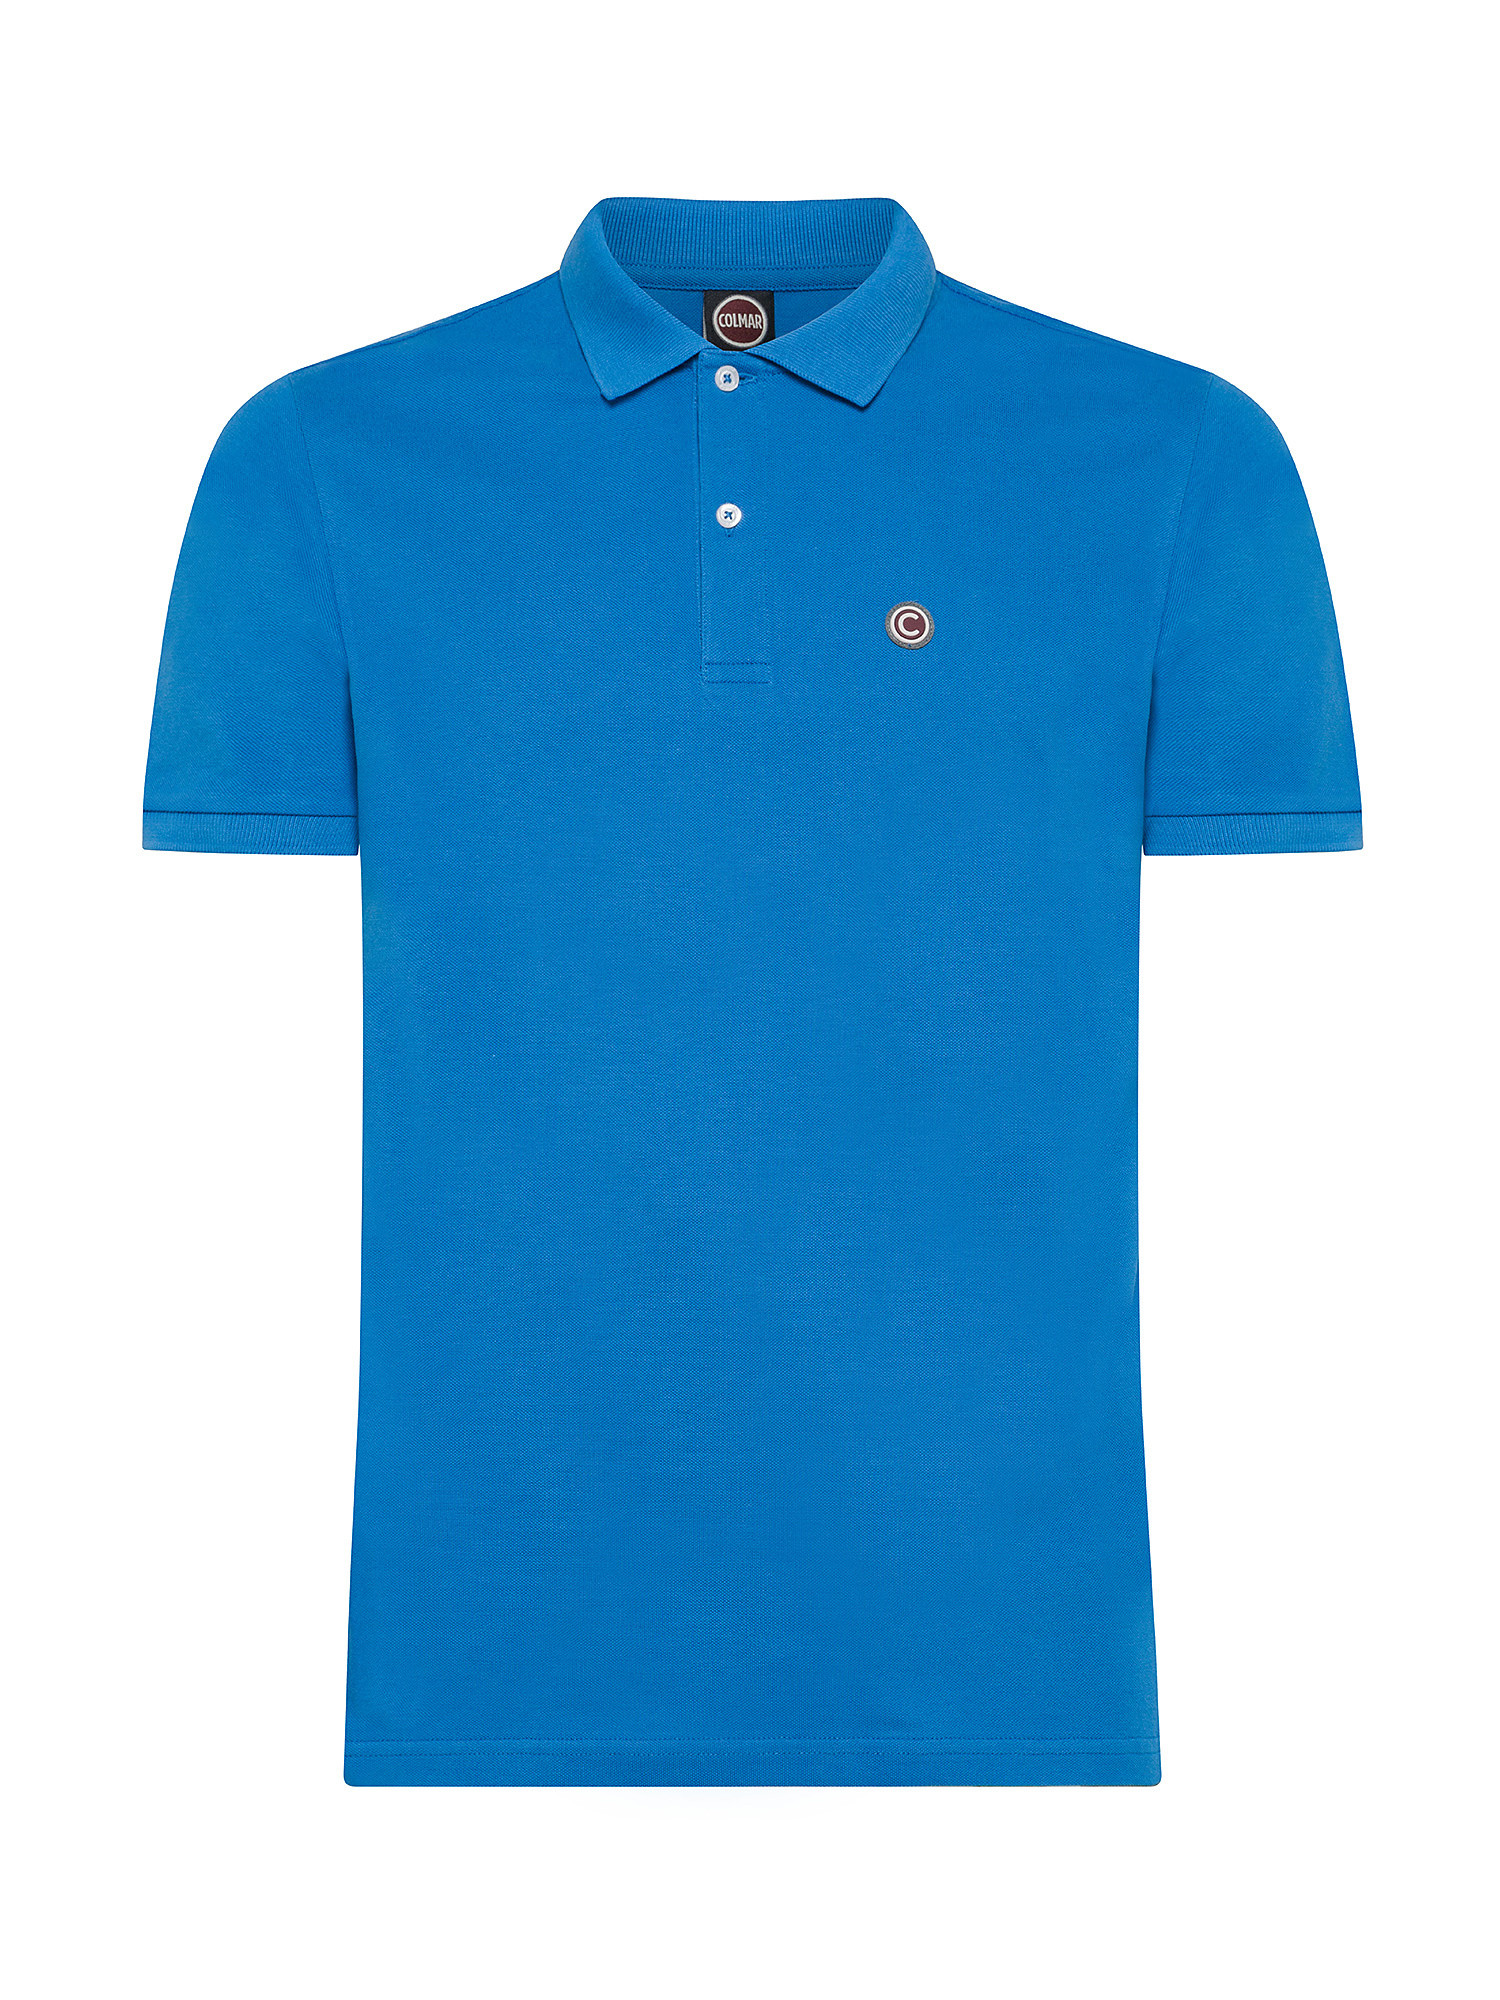 Colmar - Short-sleeved polo shirt in piqué cotton, Light Blue, large image number 0